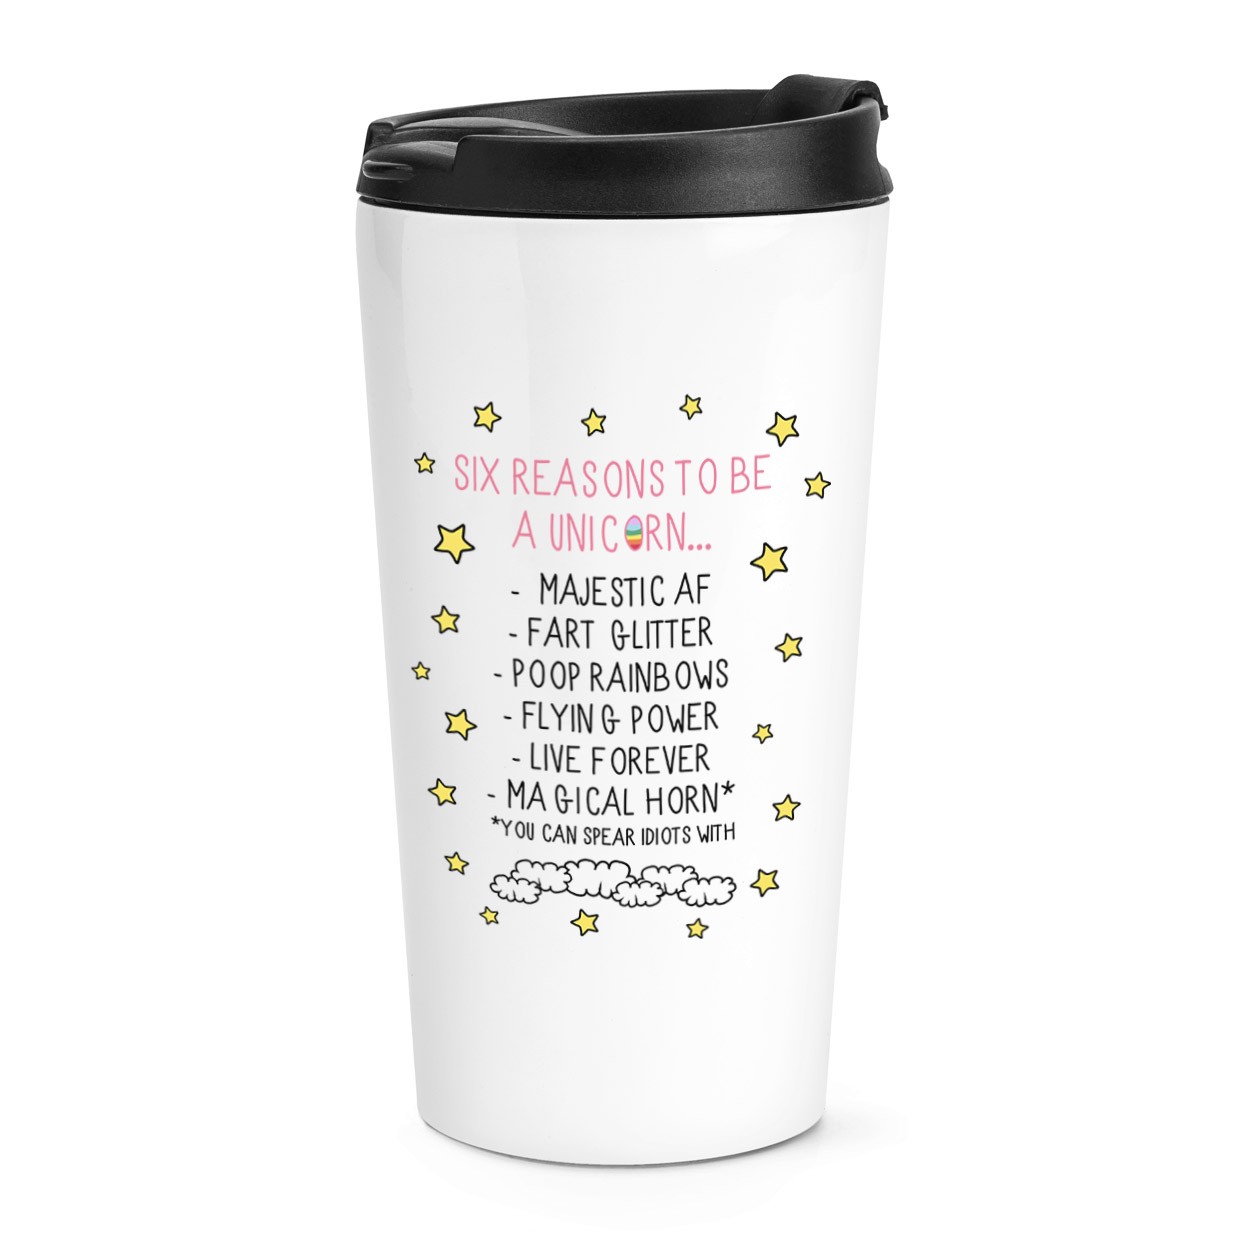 Reasons To Be A Unicorn Travel Mug Cup